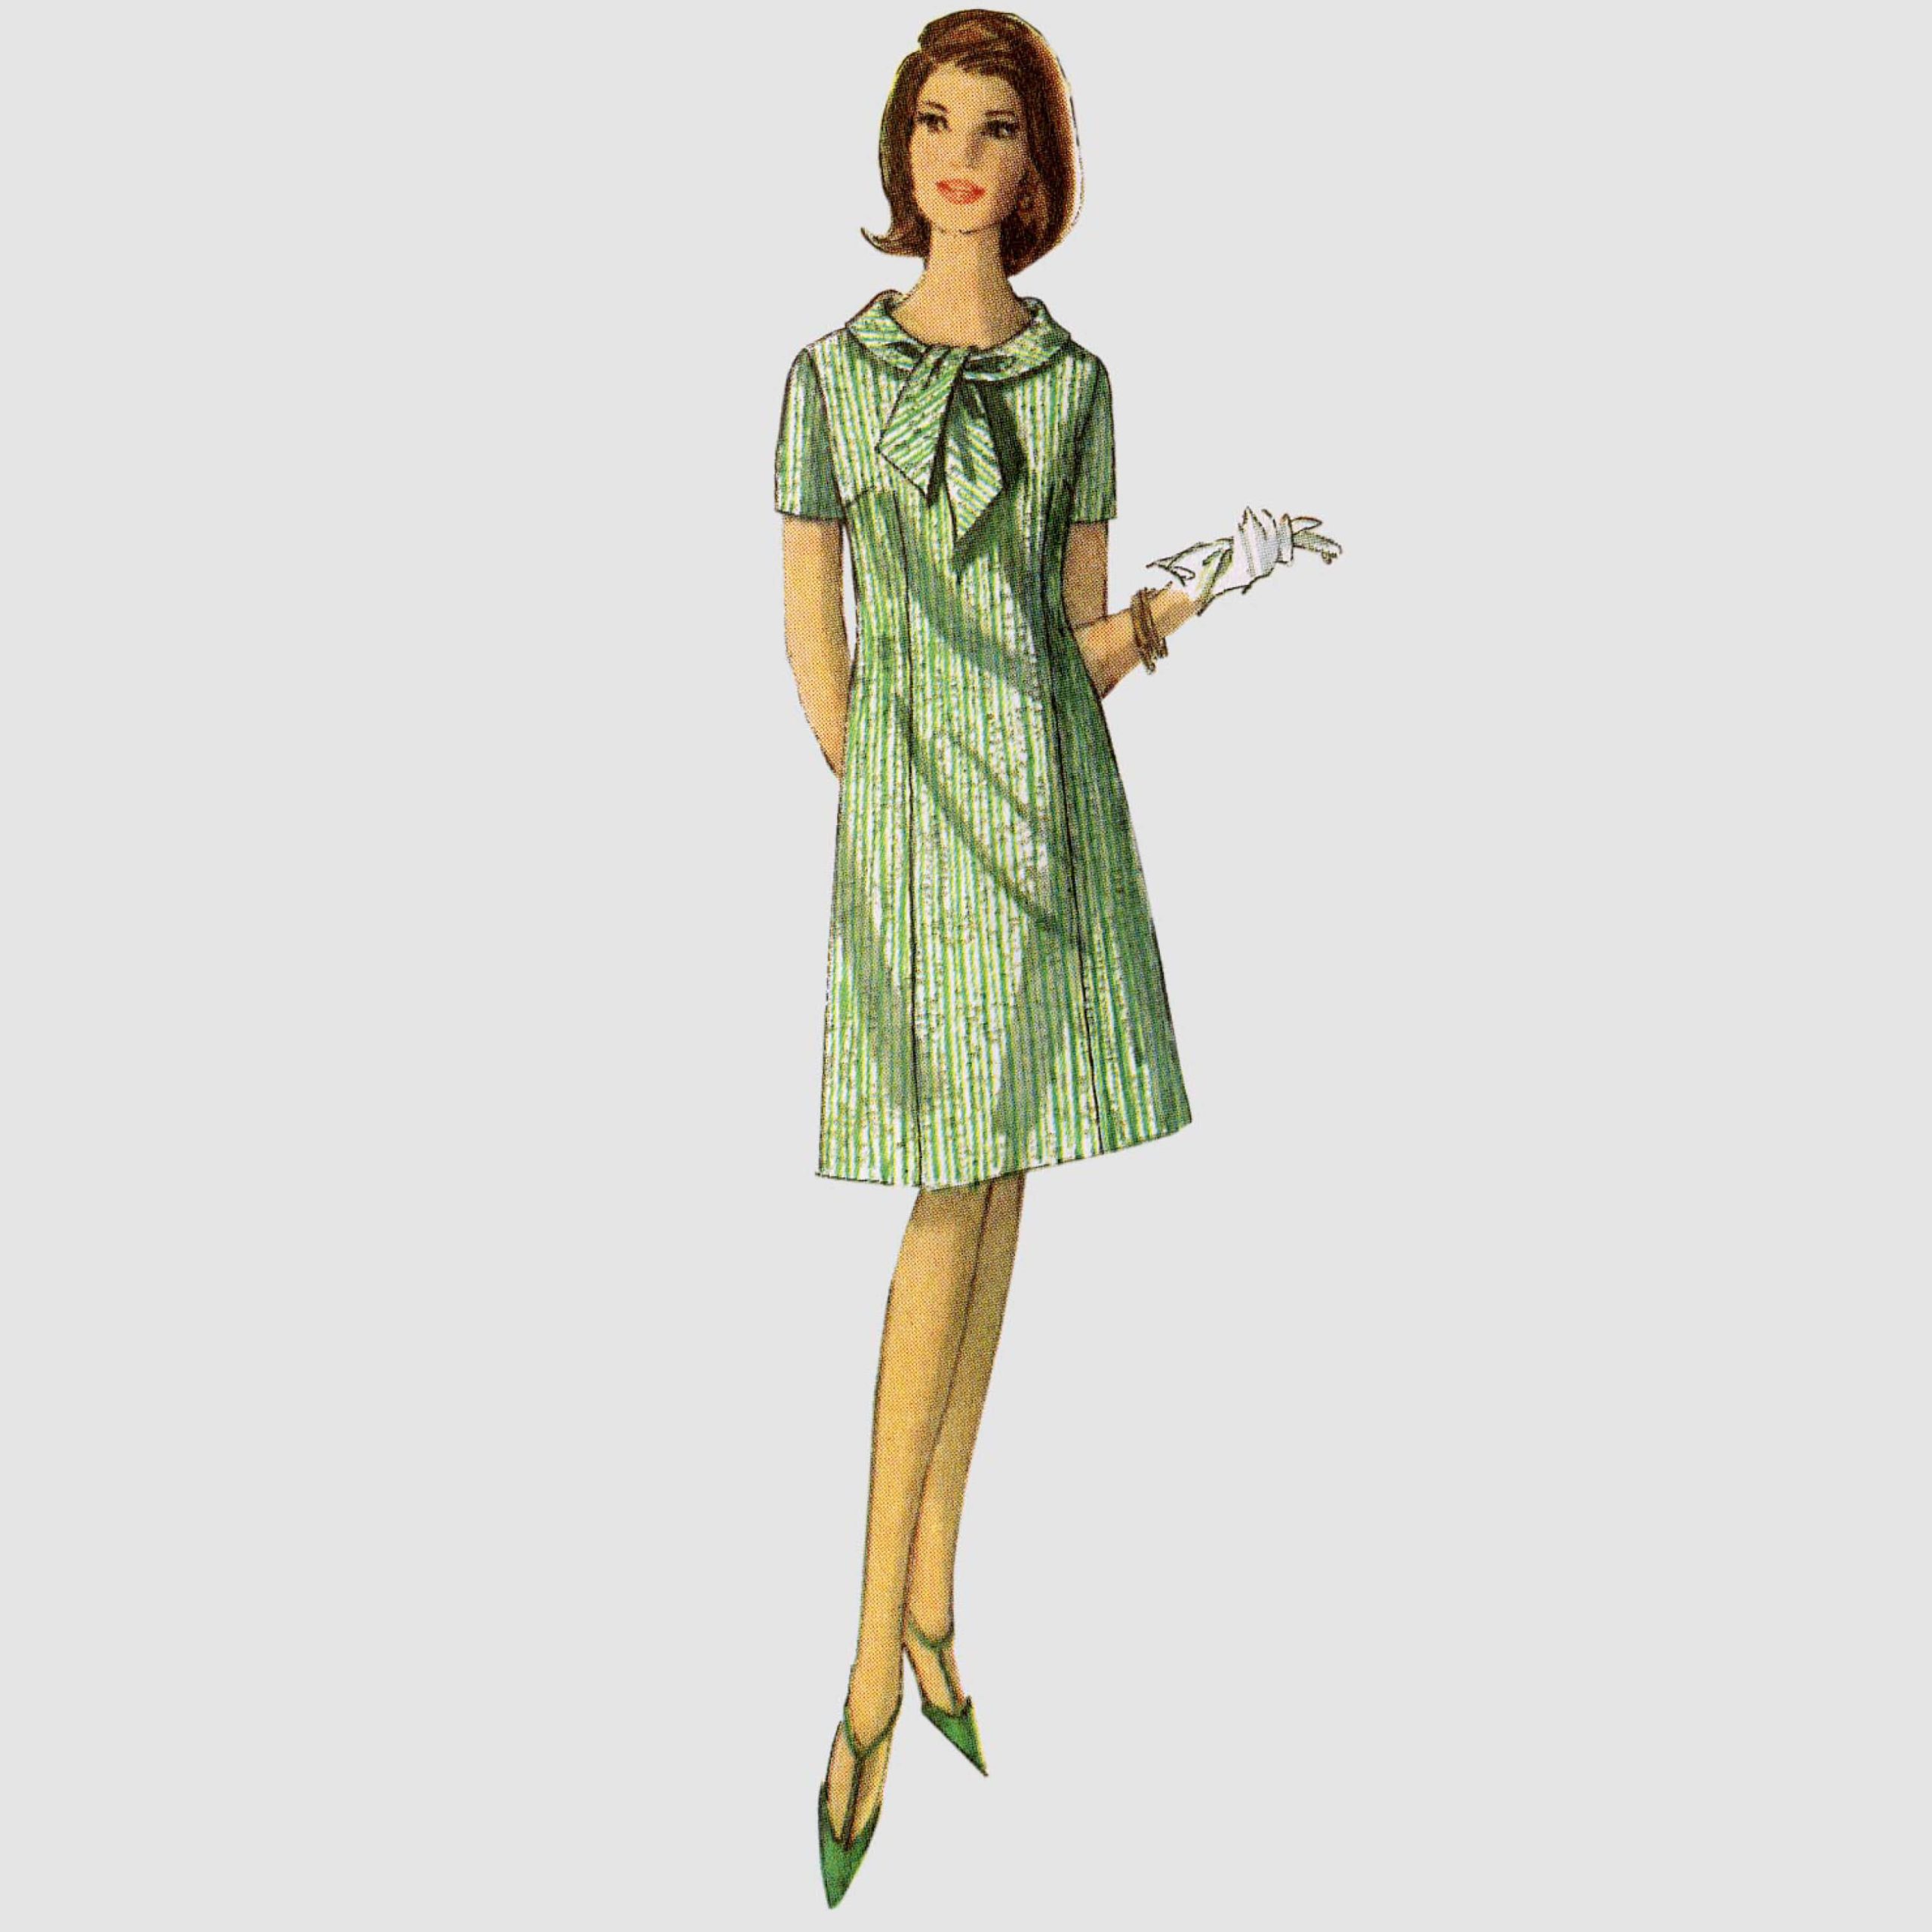 Simplicity Sewing Pattern S9104 Misses' Vintage Dresses